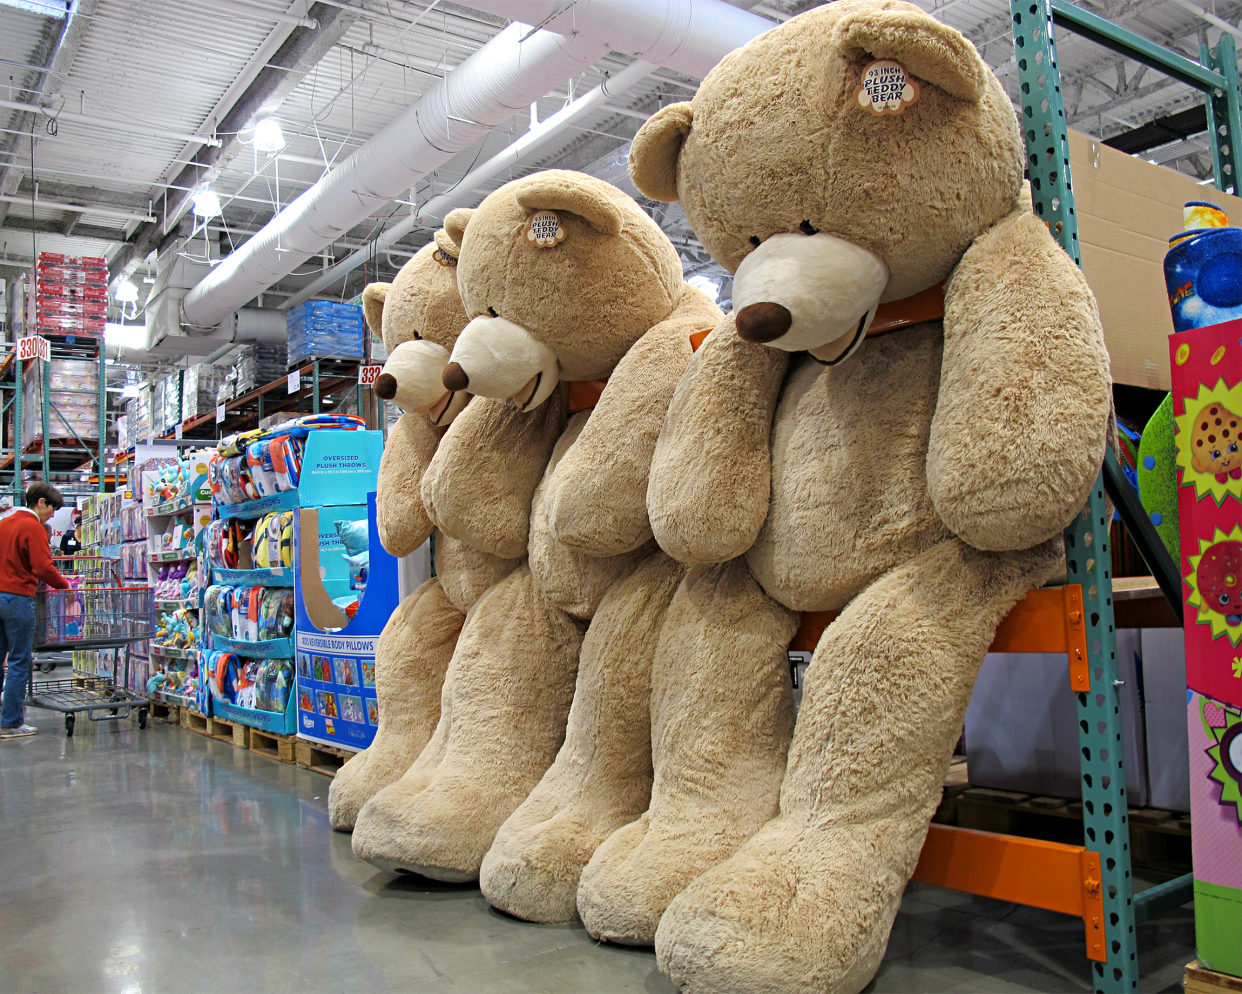 giant teddy bears at Costco